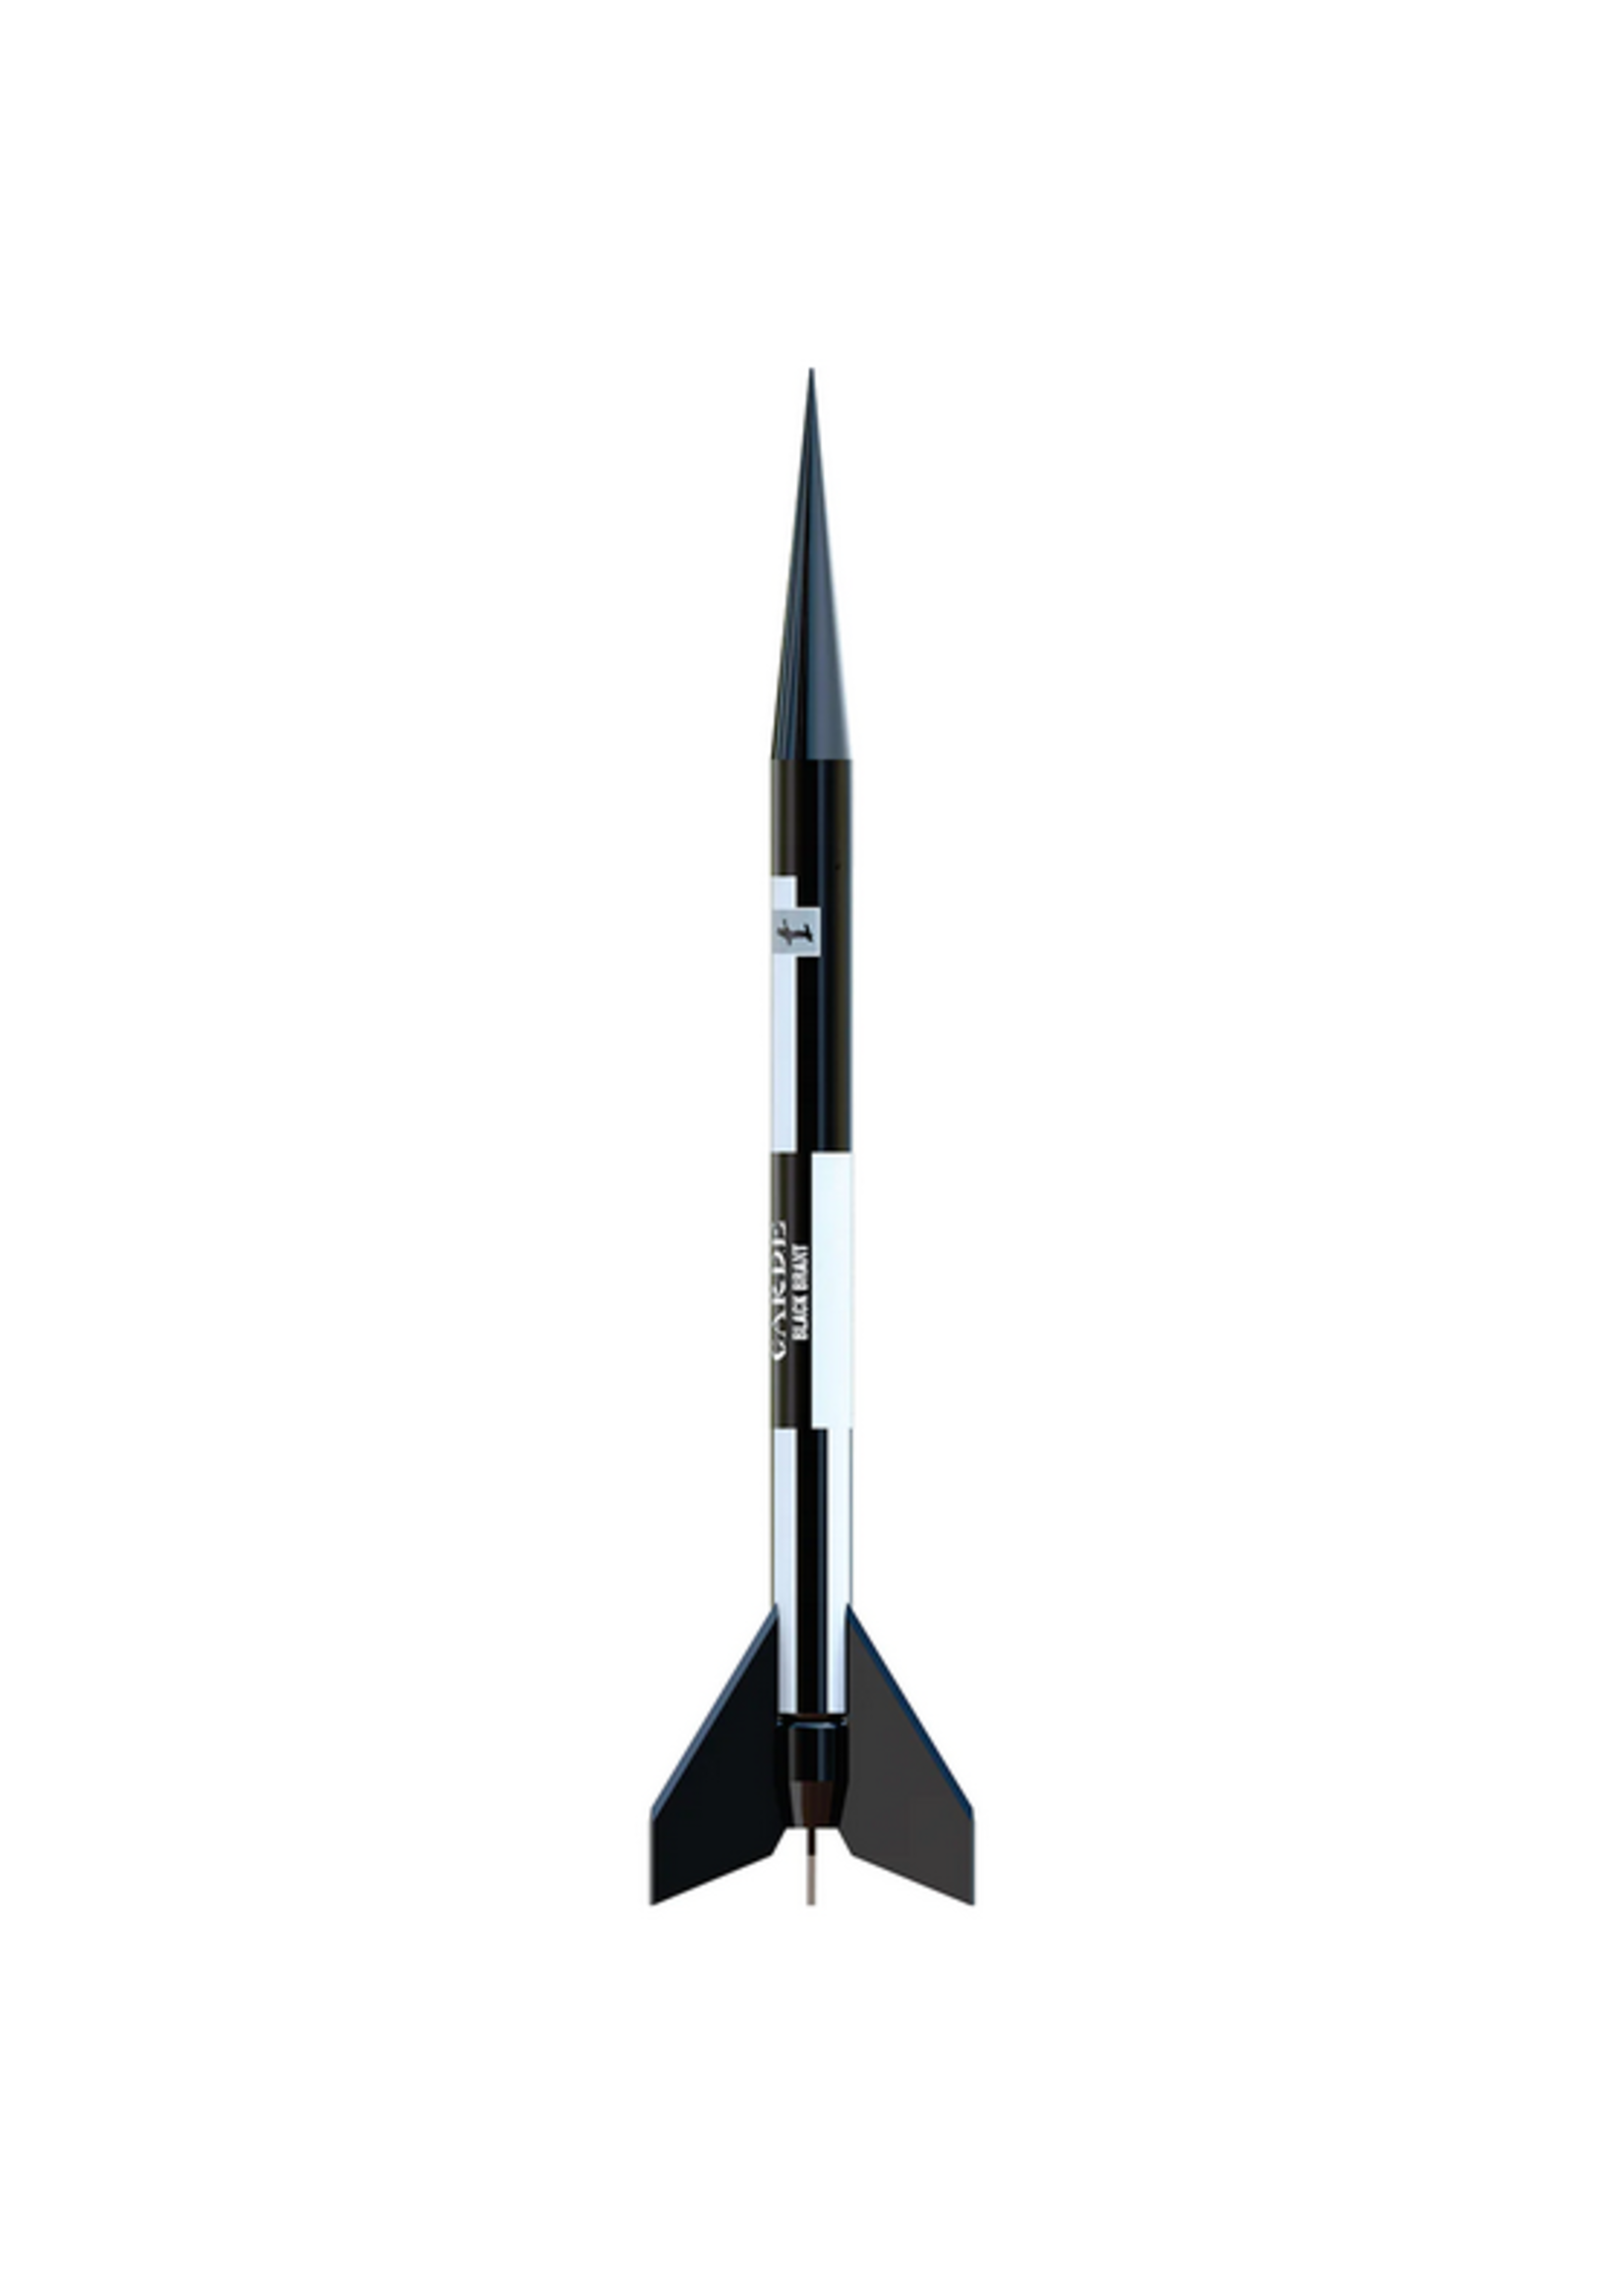 Estes Rockets EST7243 Estes Black Brant II (Scale)